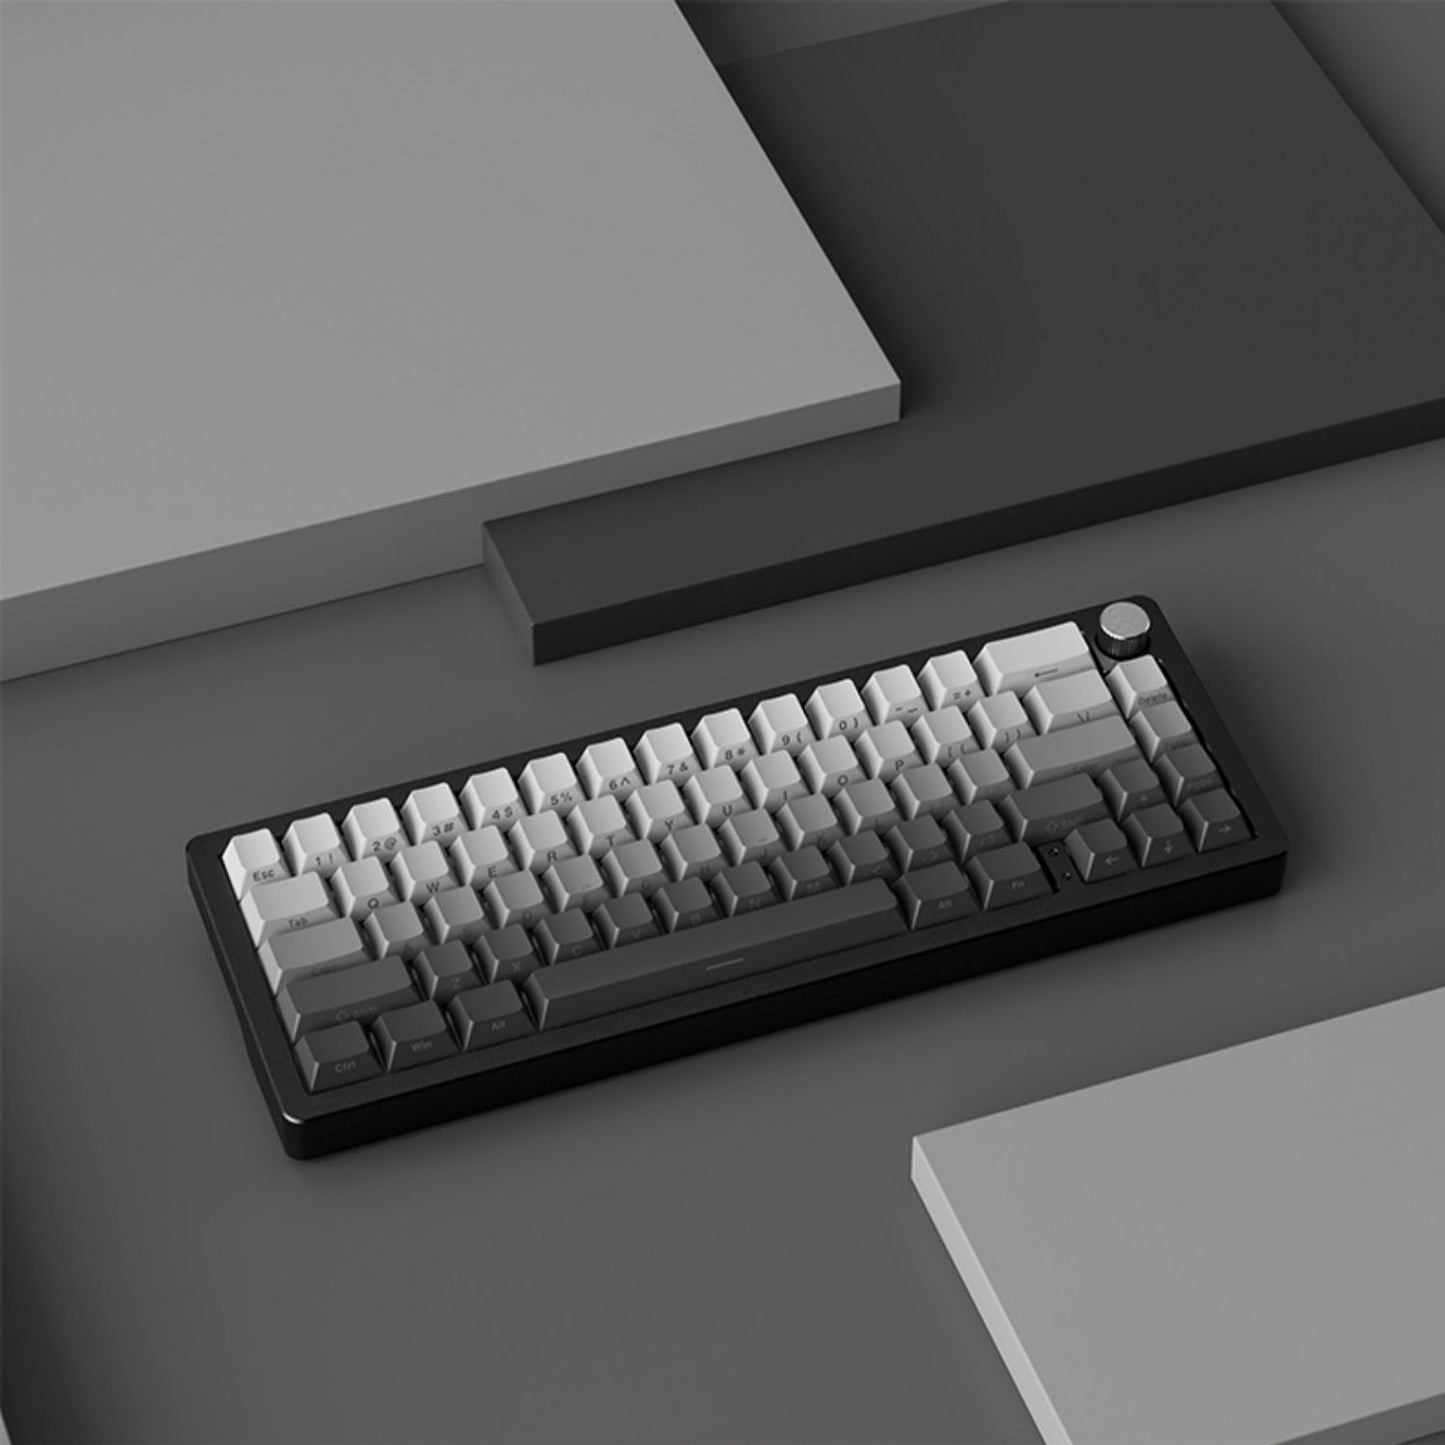 Xinmeng A66 65% Aluminum Mechanical Keyboard